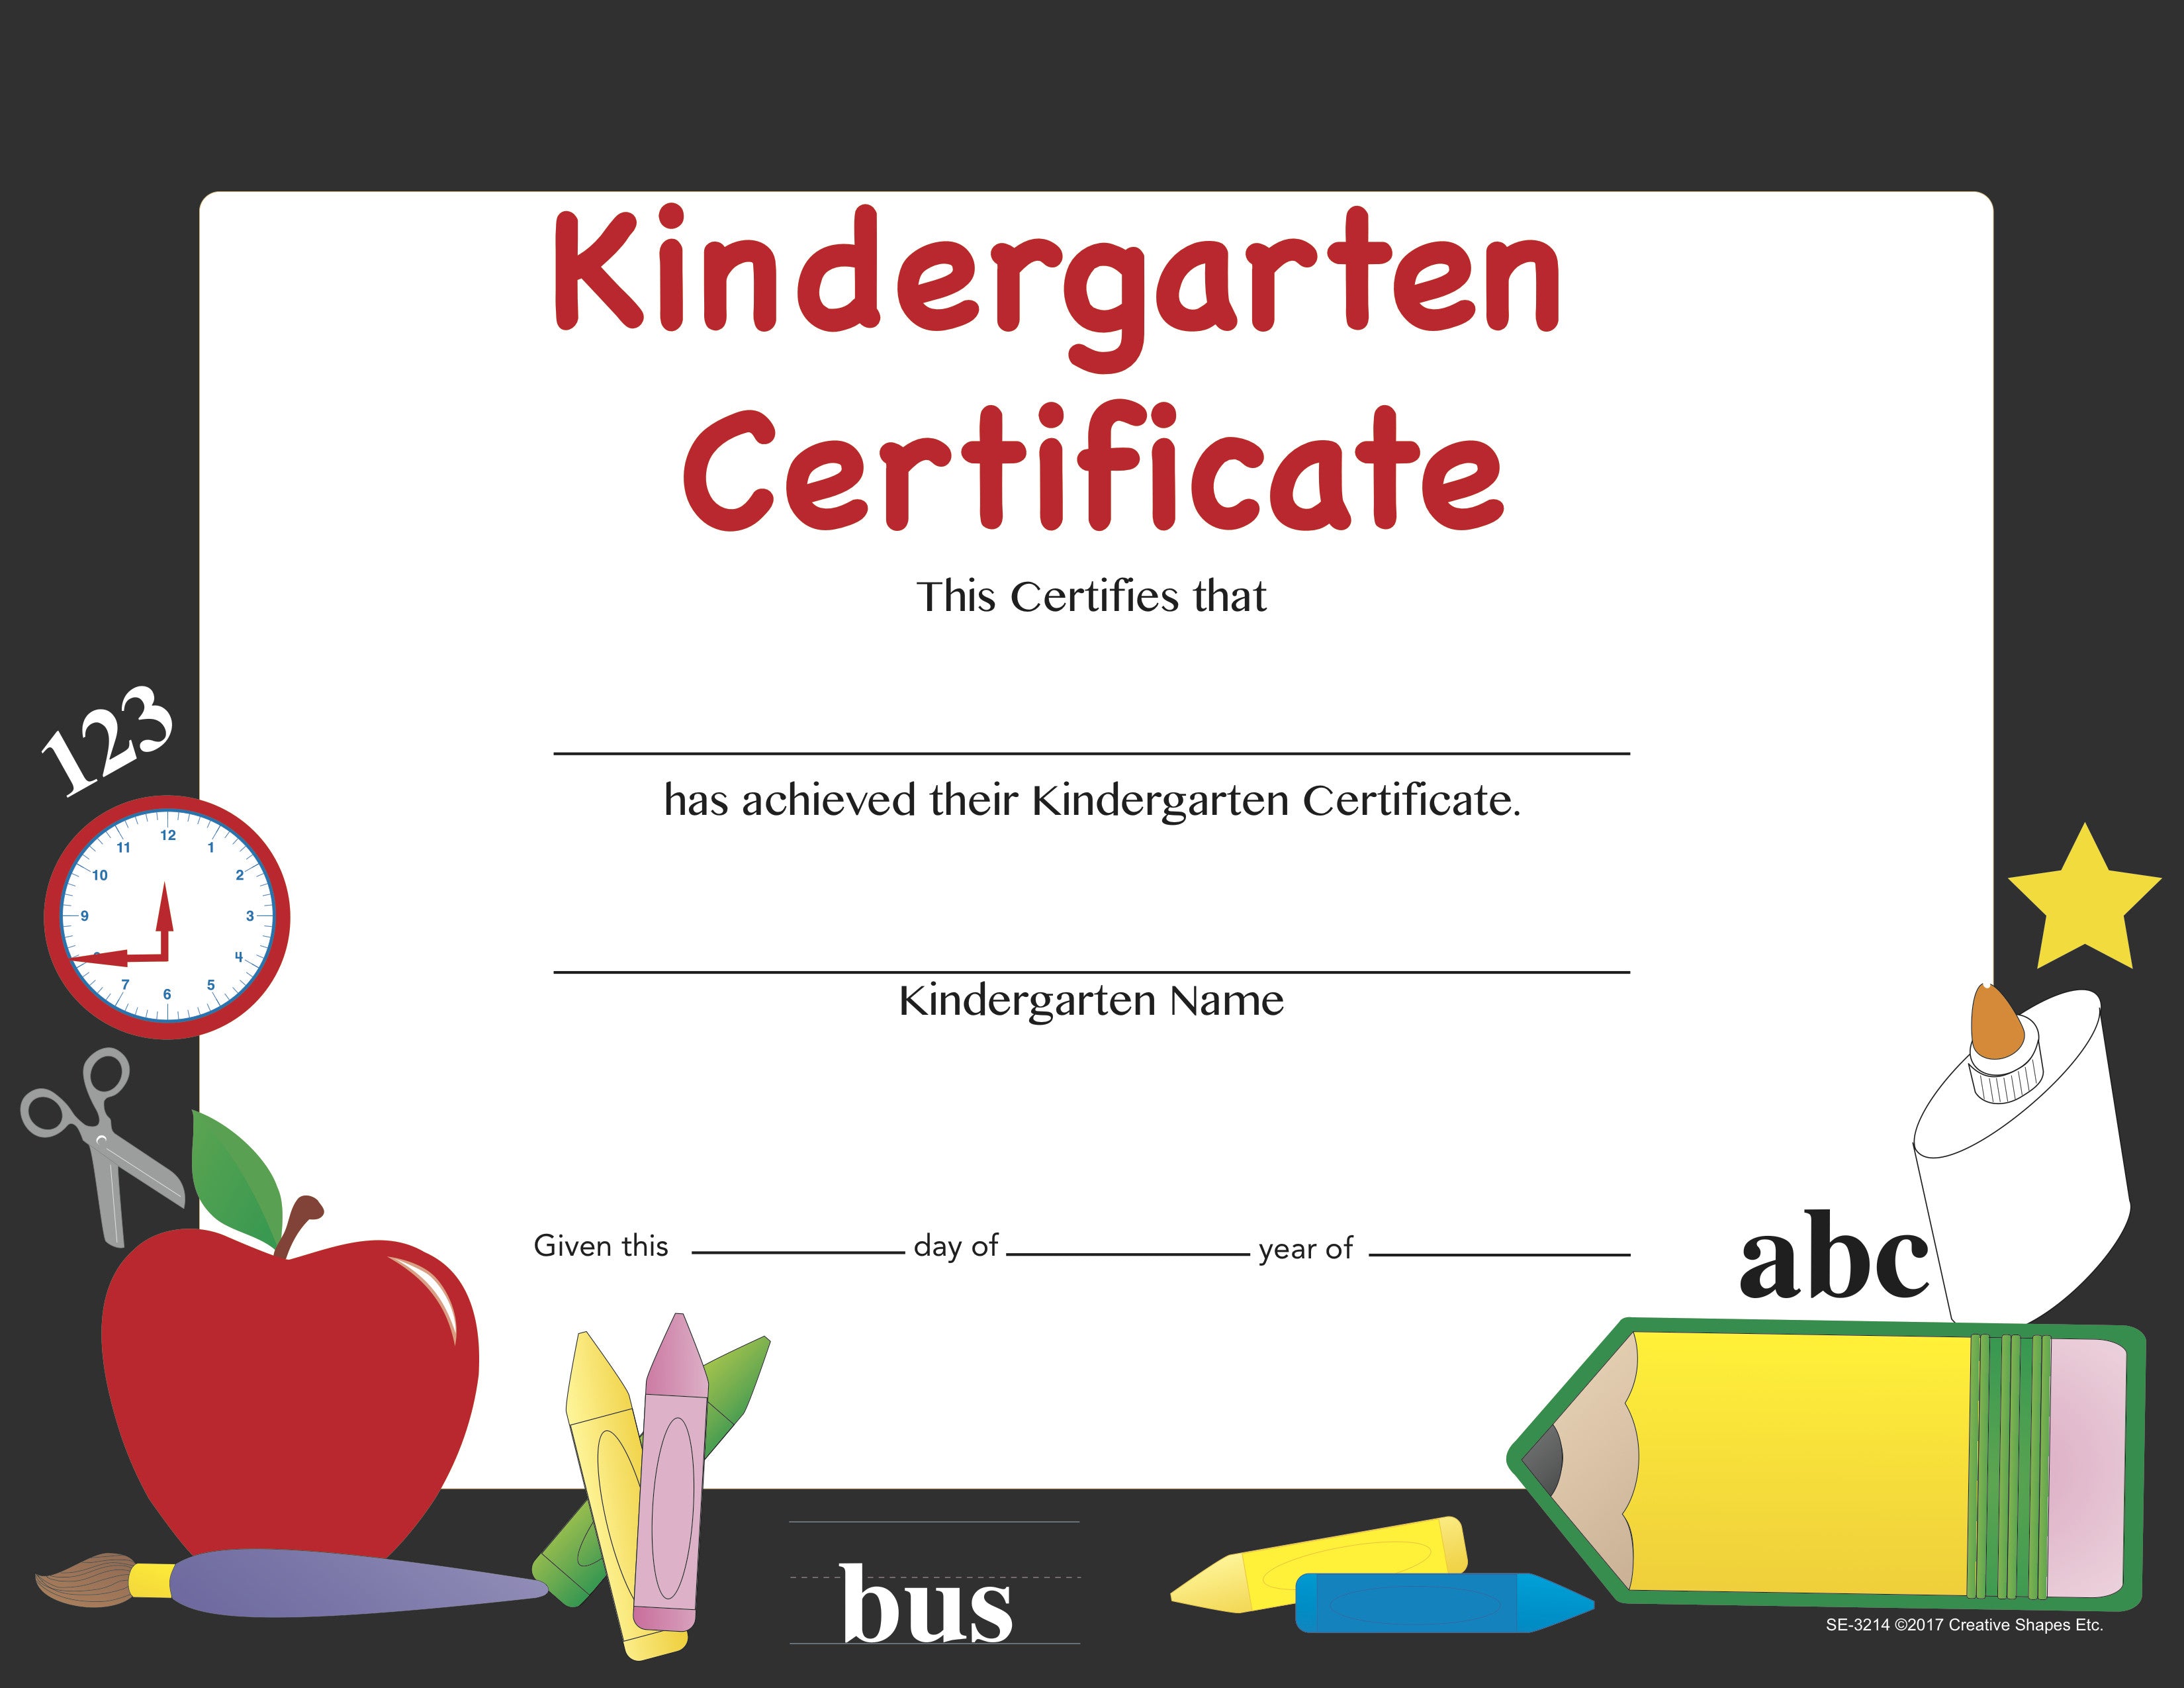 kid certificate templates free printable